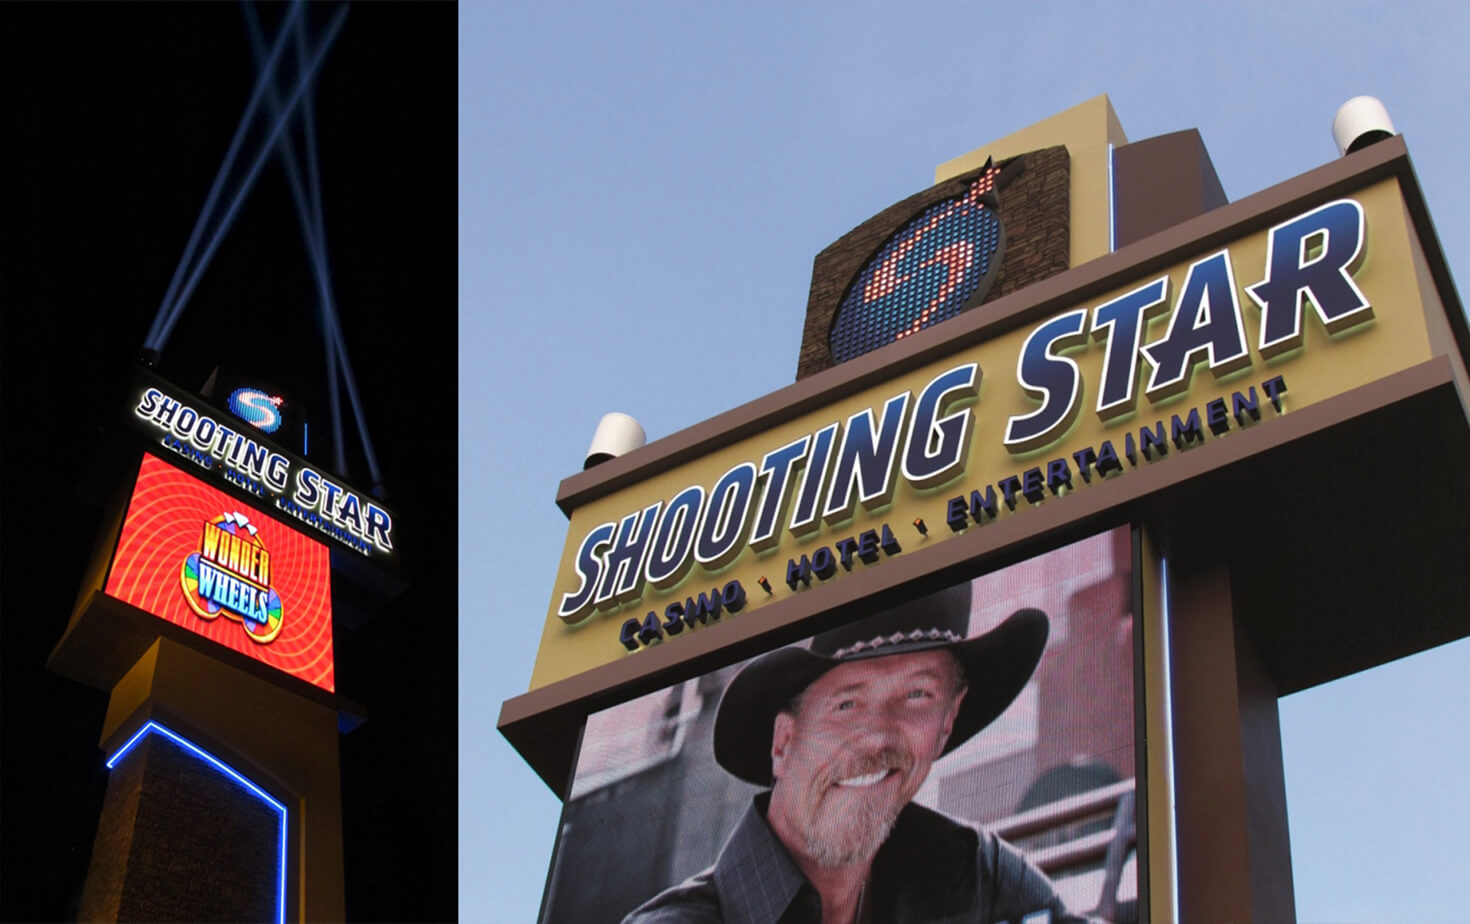 Shooting Star Casino in Mahnomen MN Exterior Pylon Sign Header showcasing Digital Display and Accent Lighting